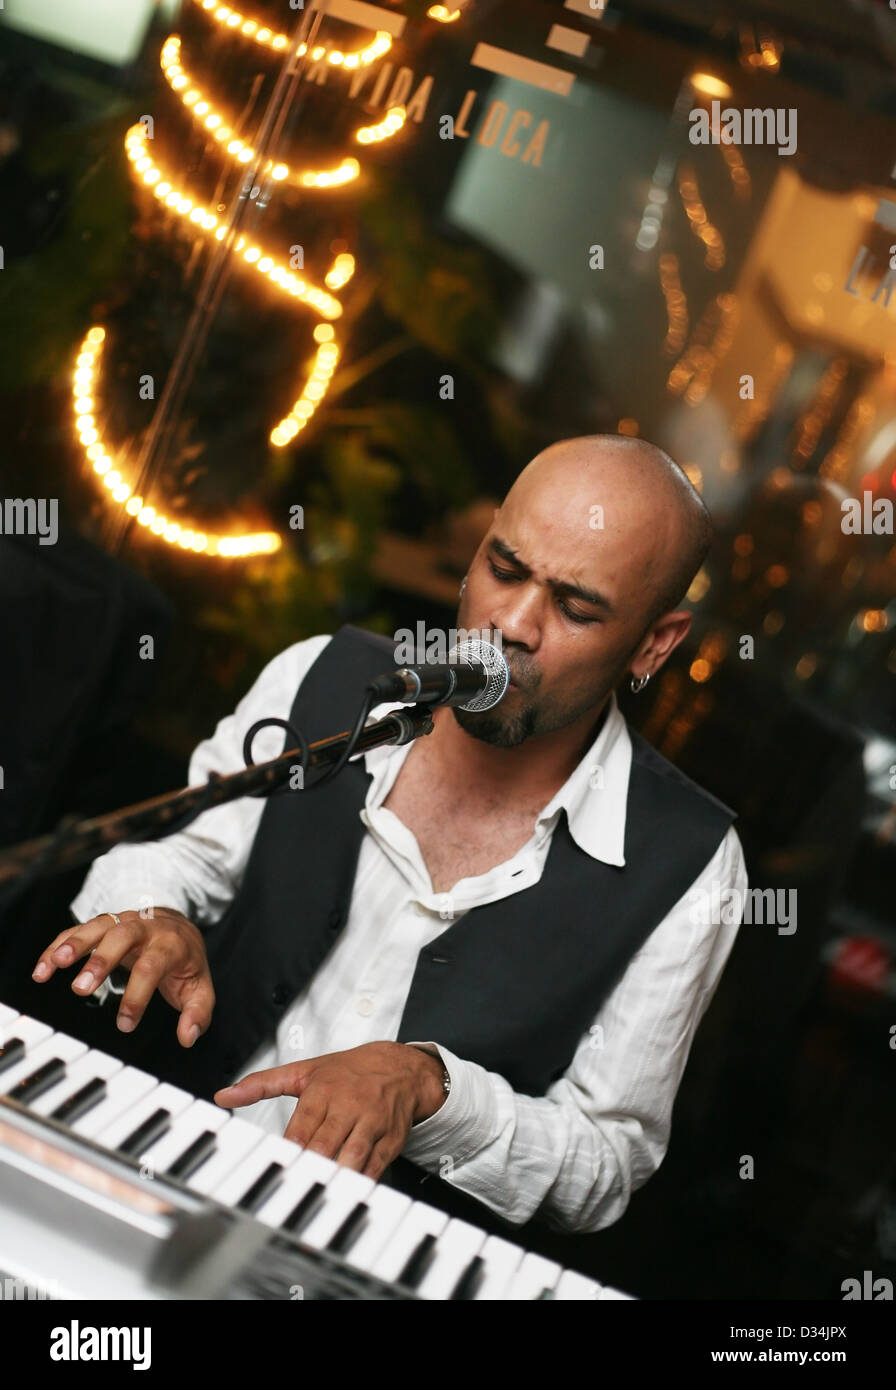 Singer at an alive concert in a night club 'La vida loka'. Bali. Indonesia Stock Photo